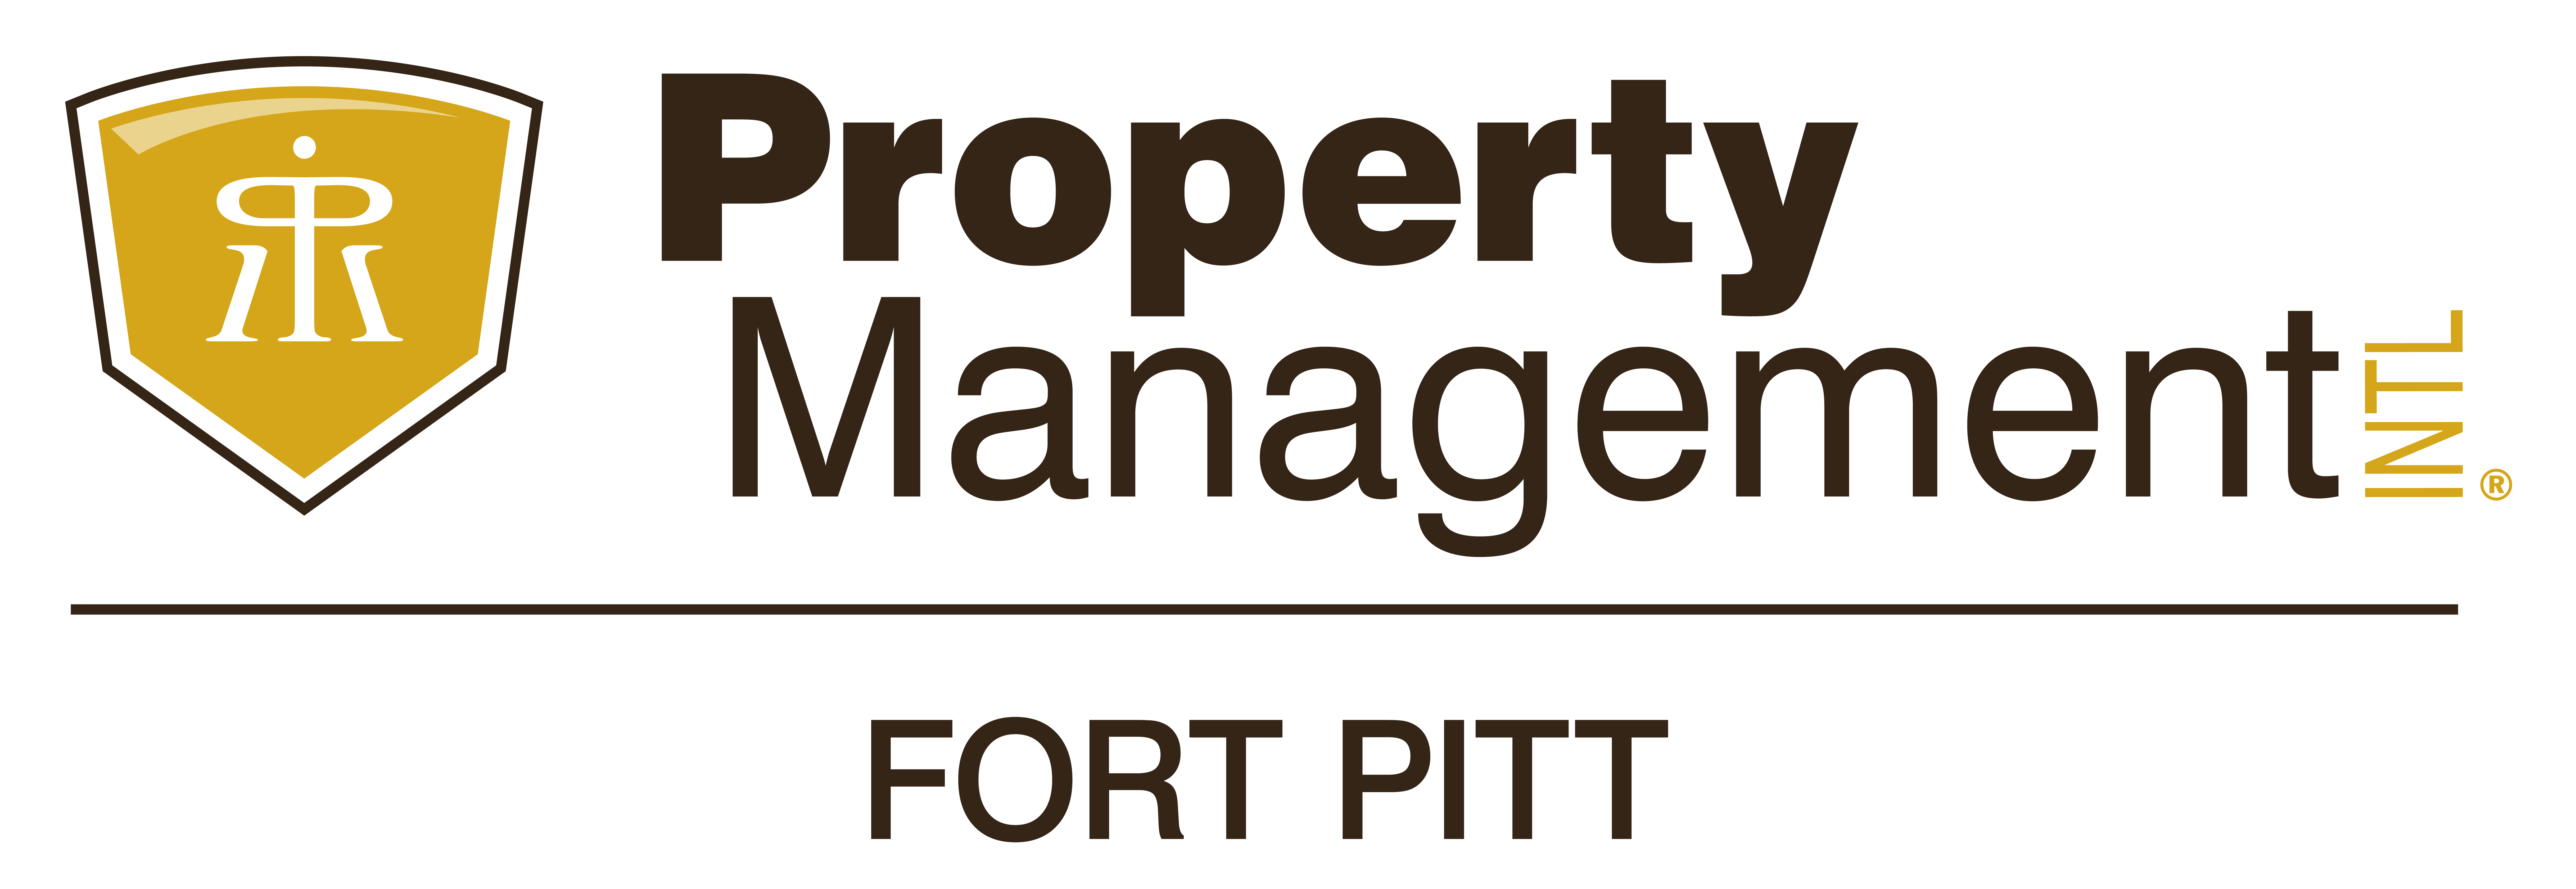 Fort Pitt Property Management